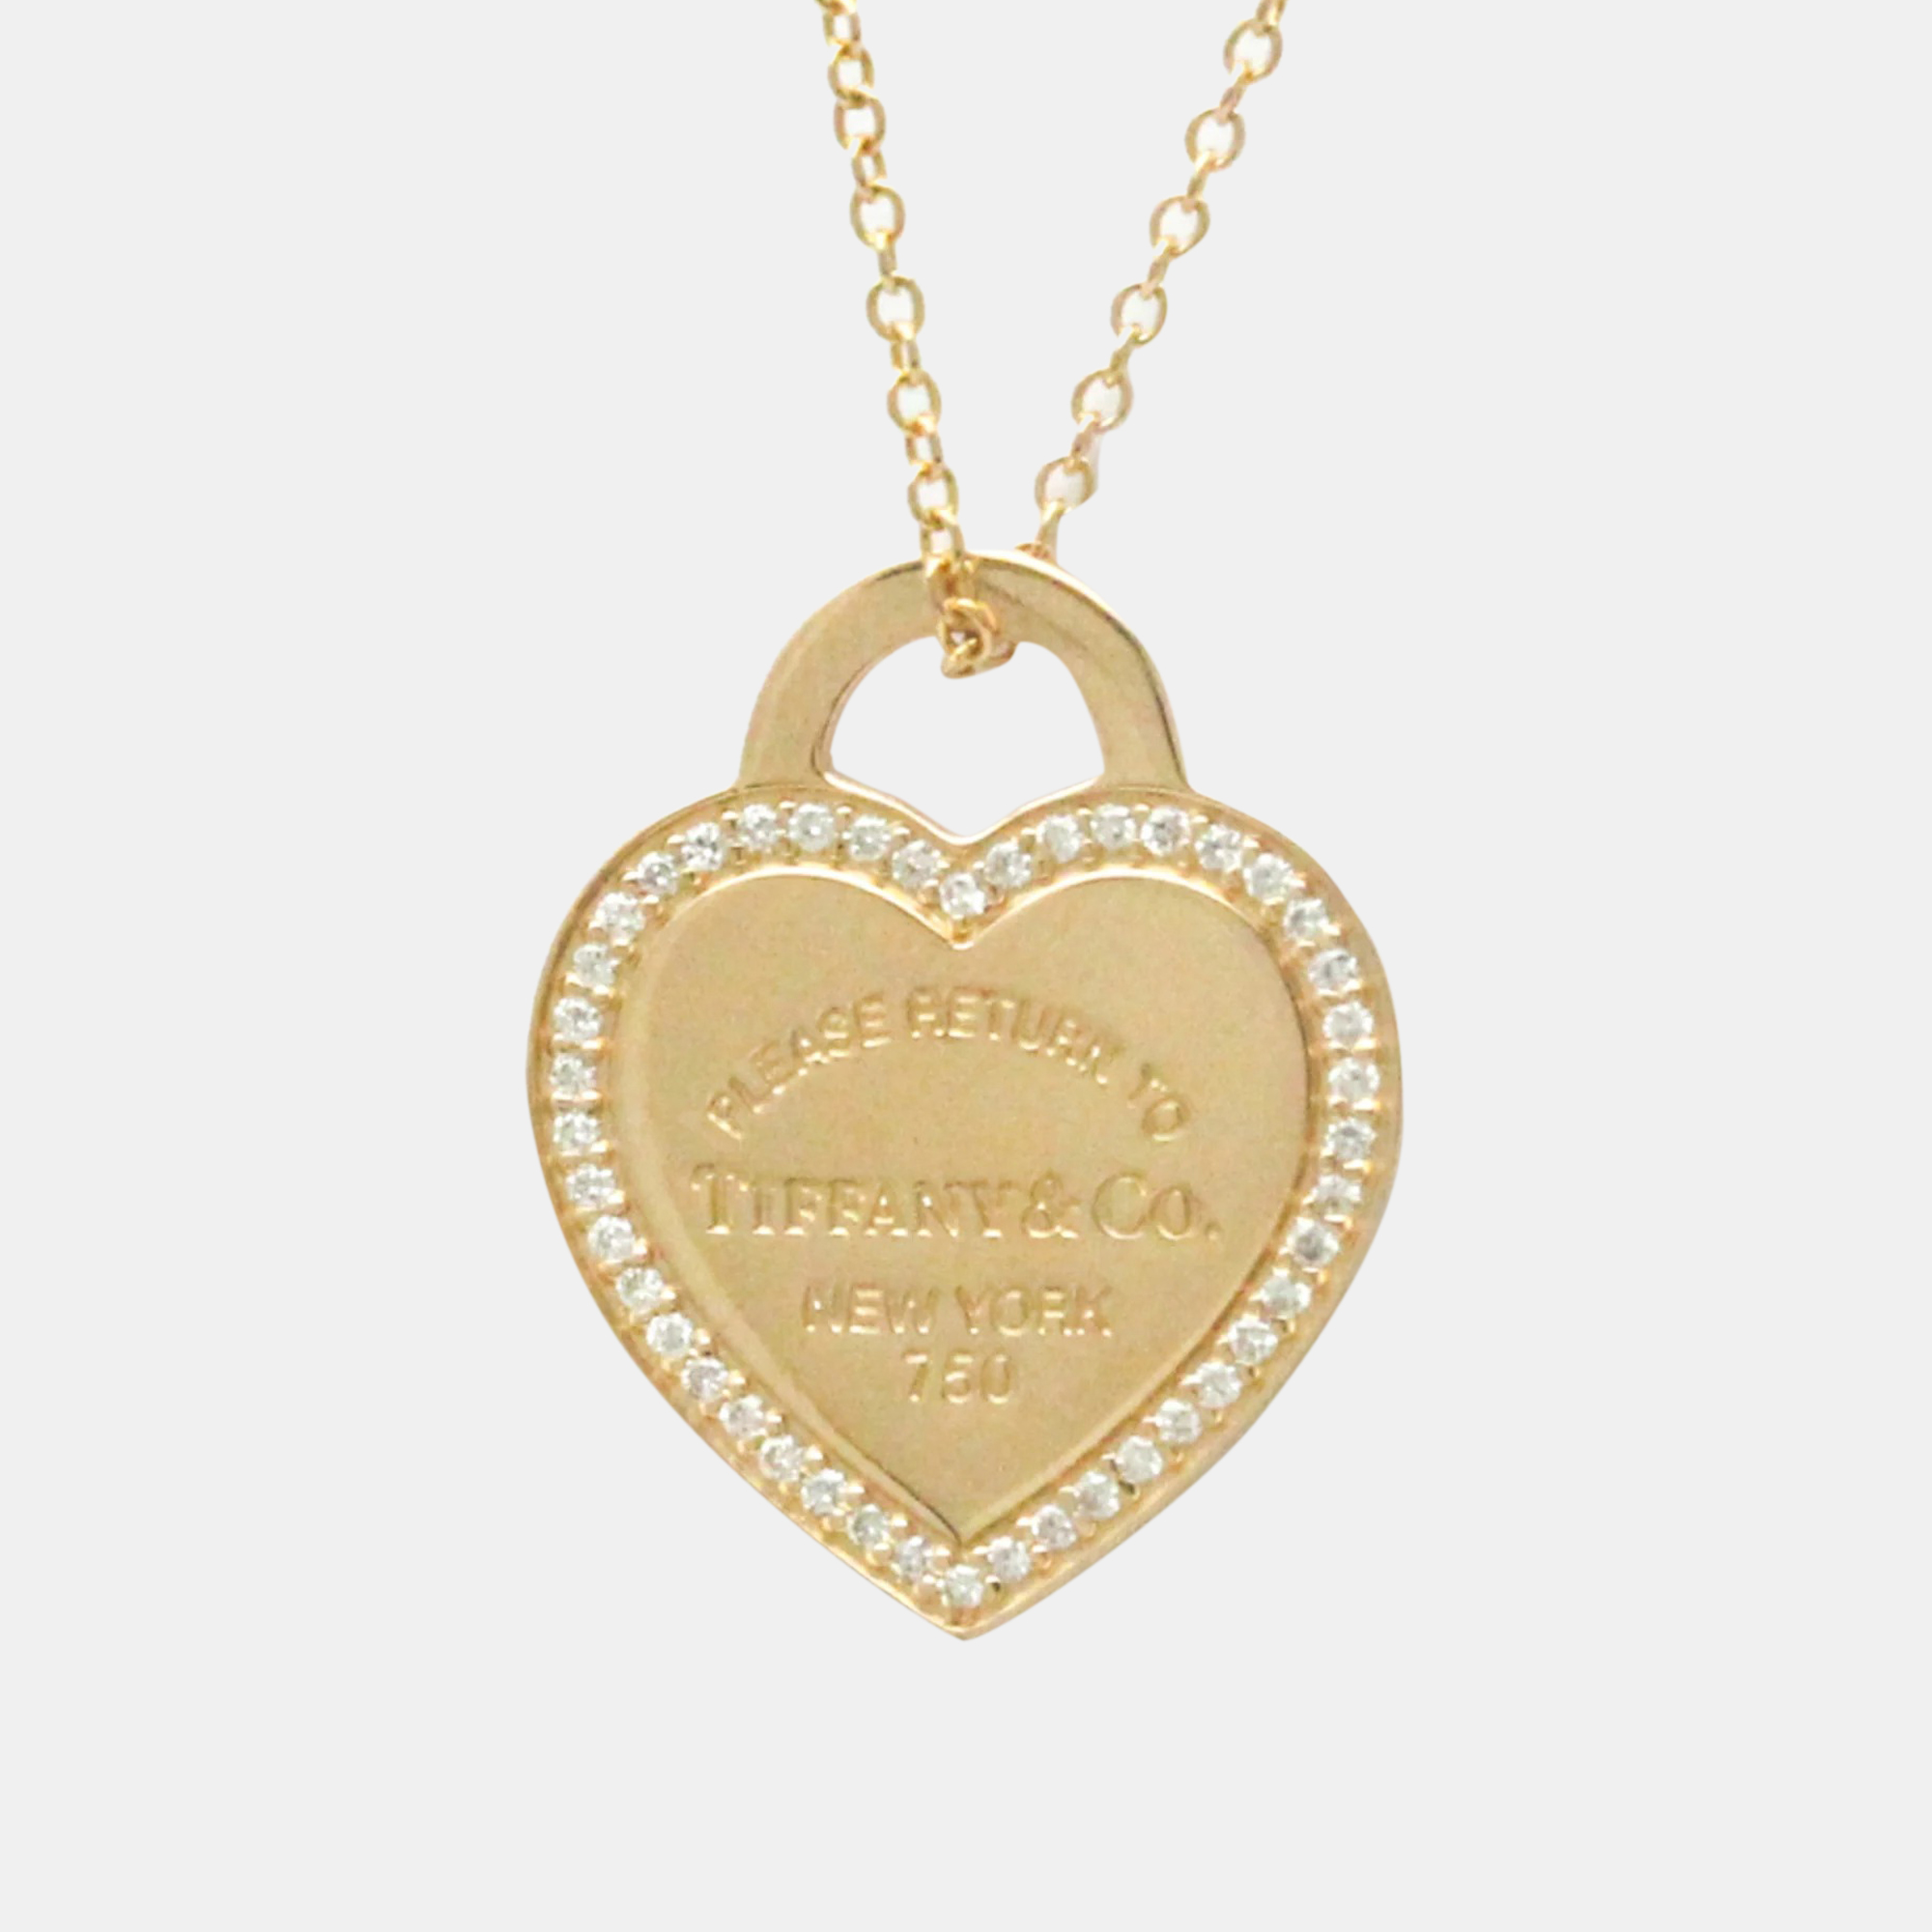 Tiffany & co. 18k rose gold and diamond return to tiffany pendant necklace